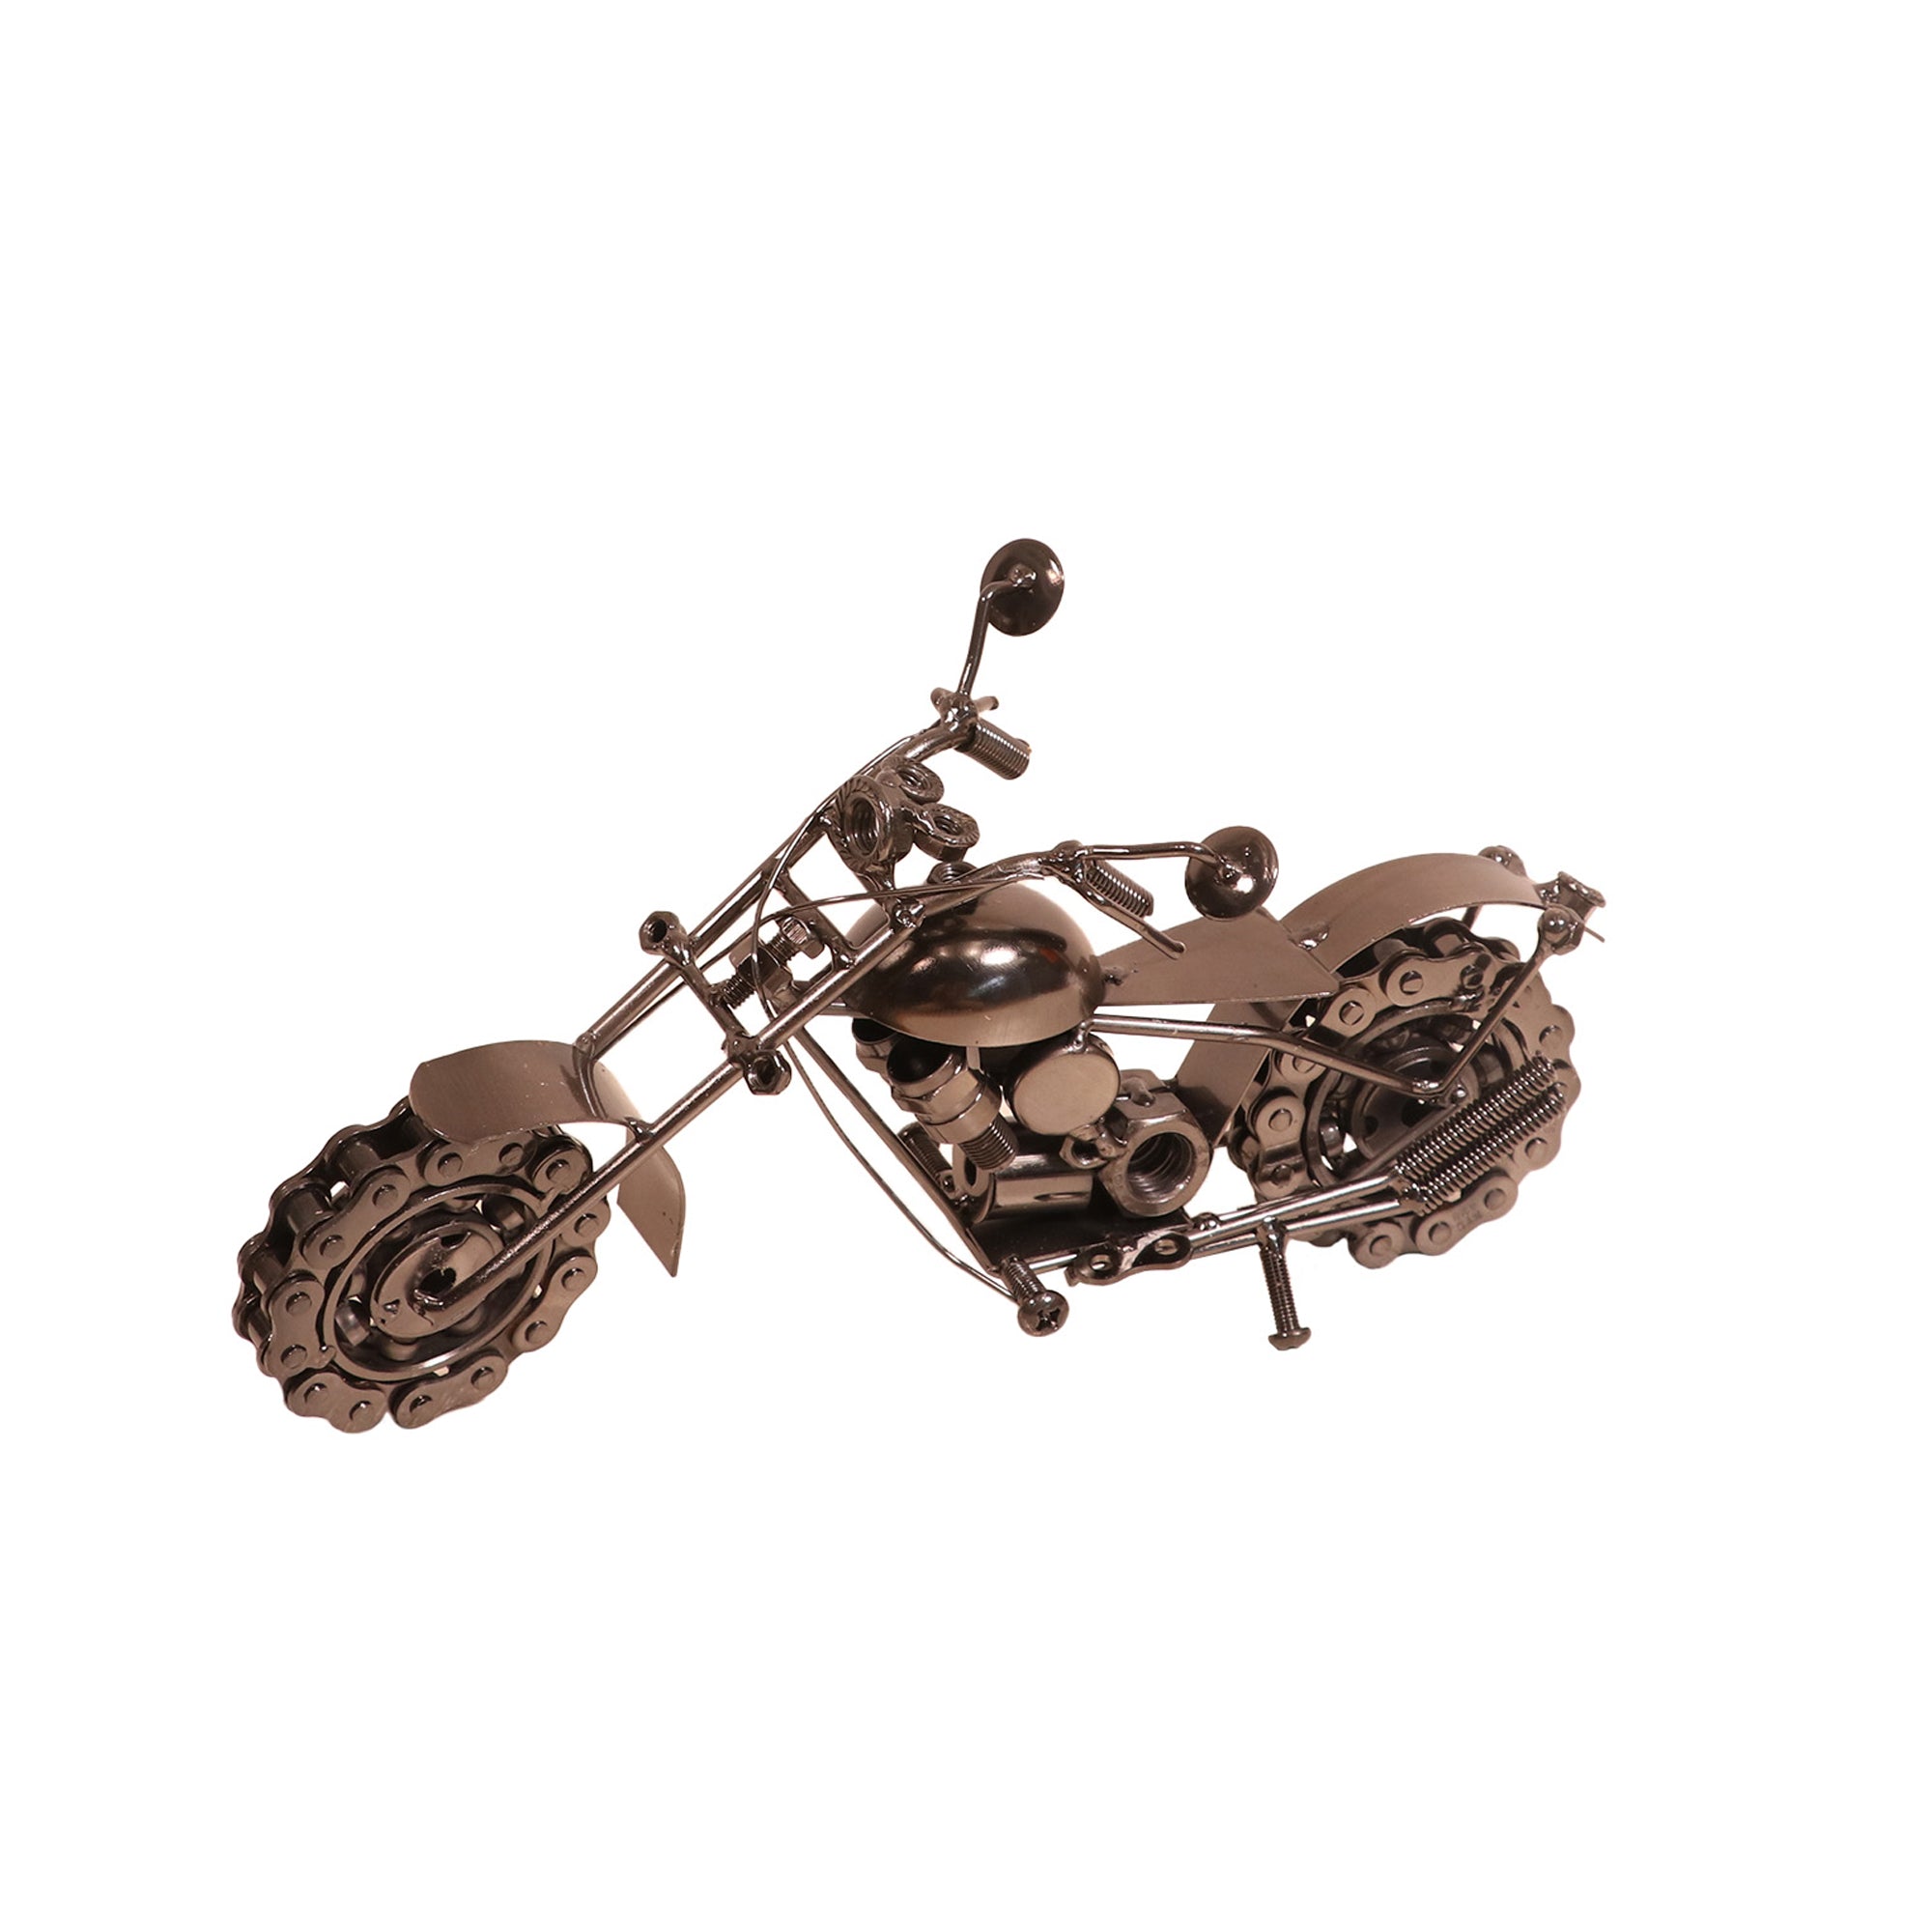 Metallic Beautiful bike Miniature Vehicle figurine